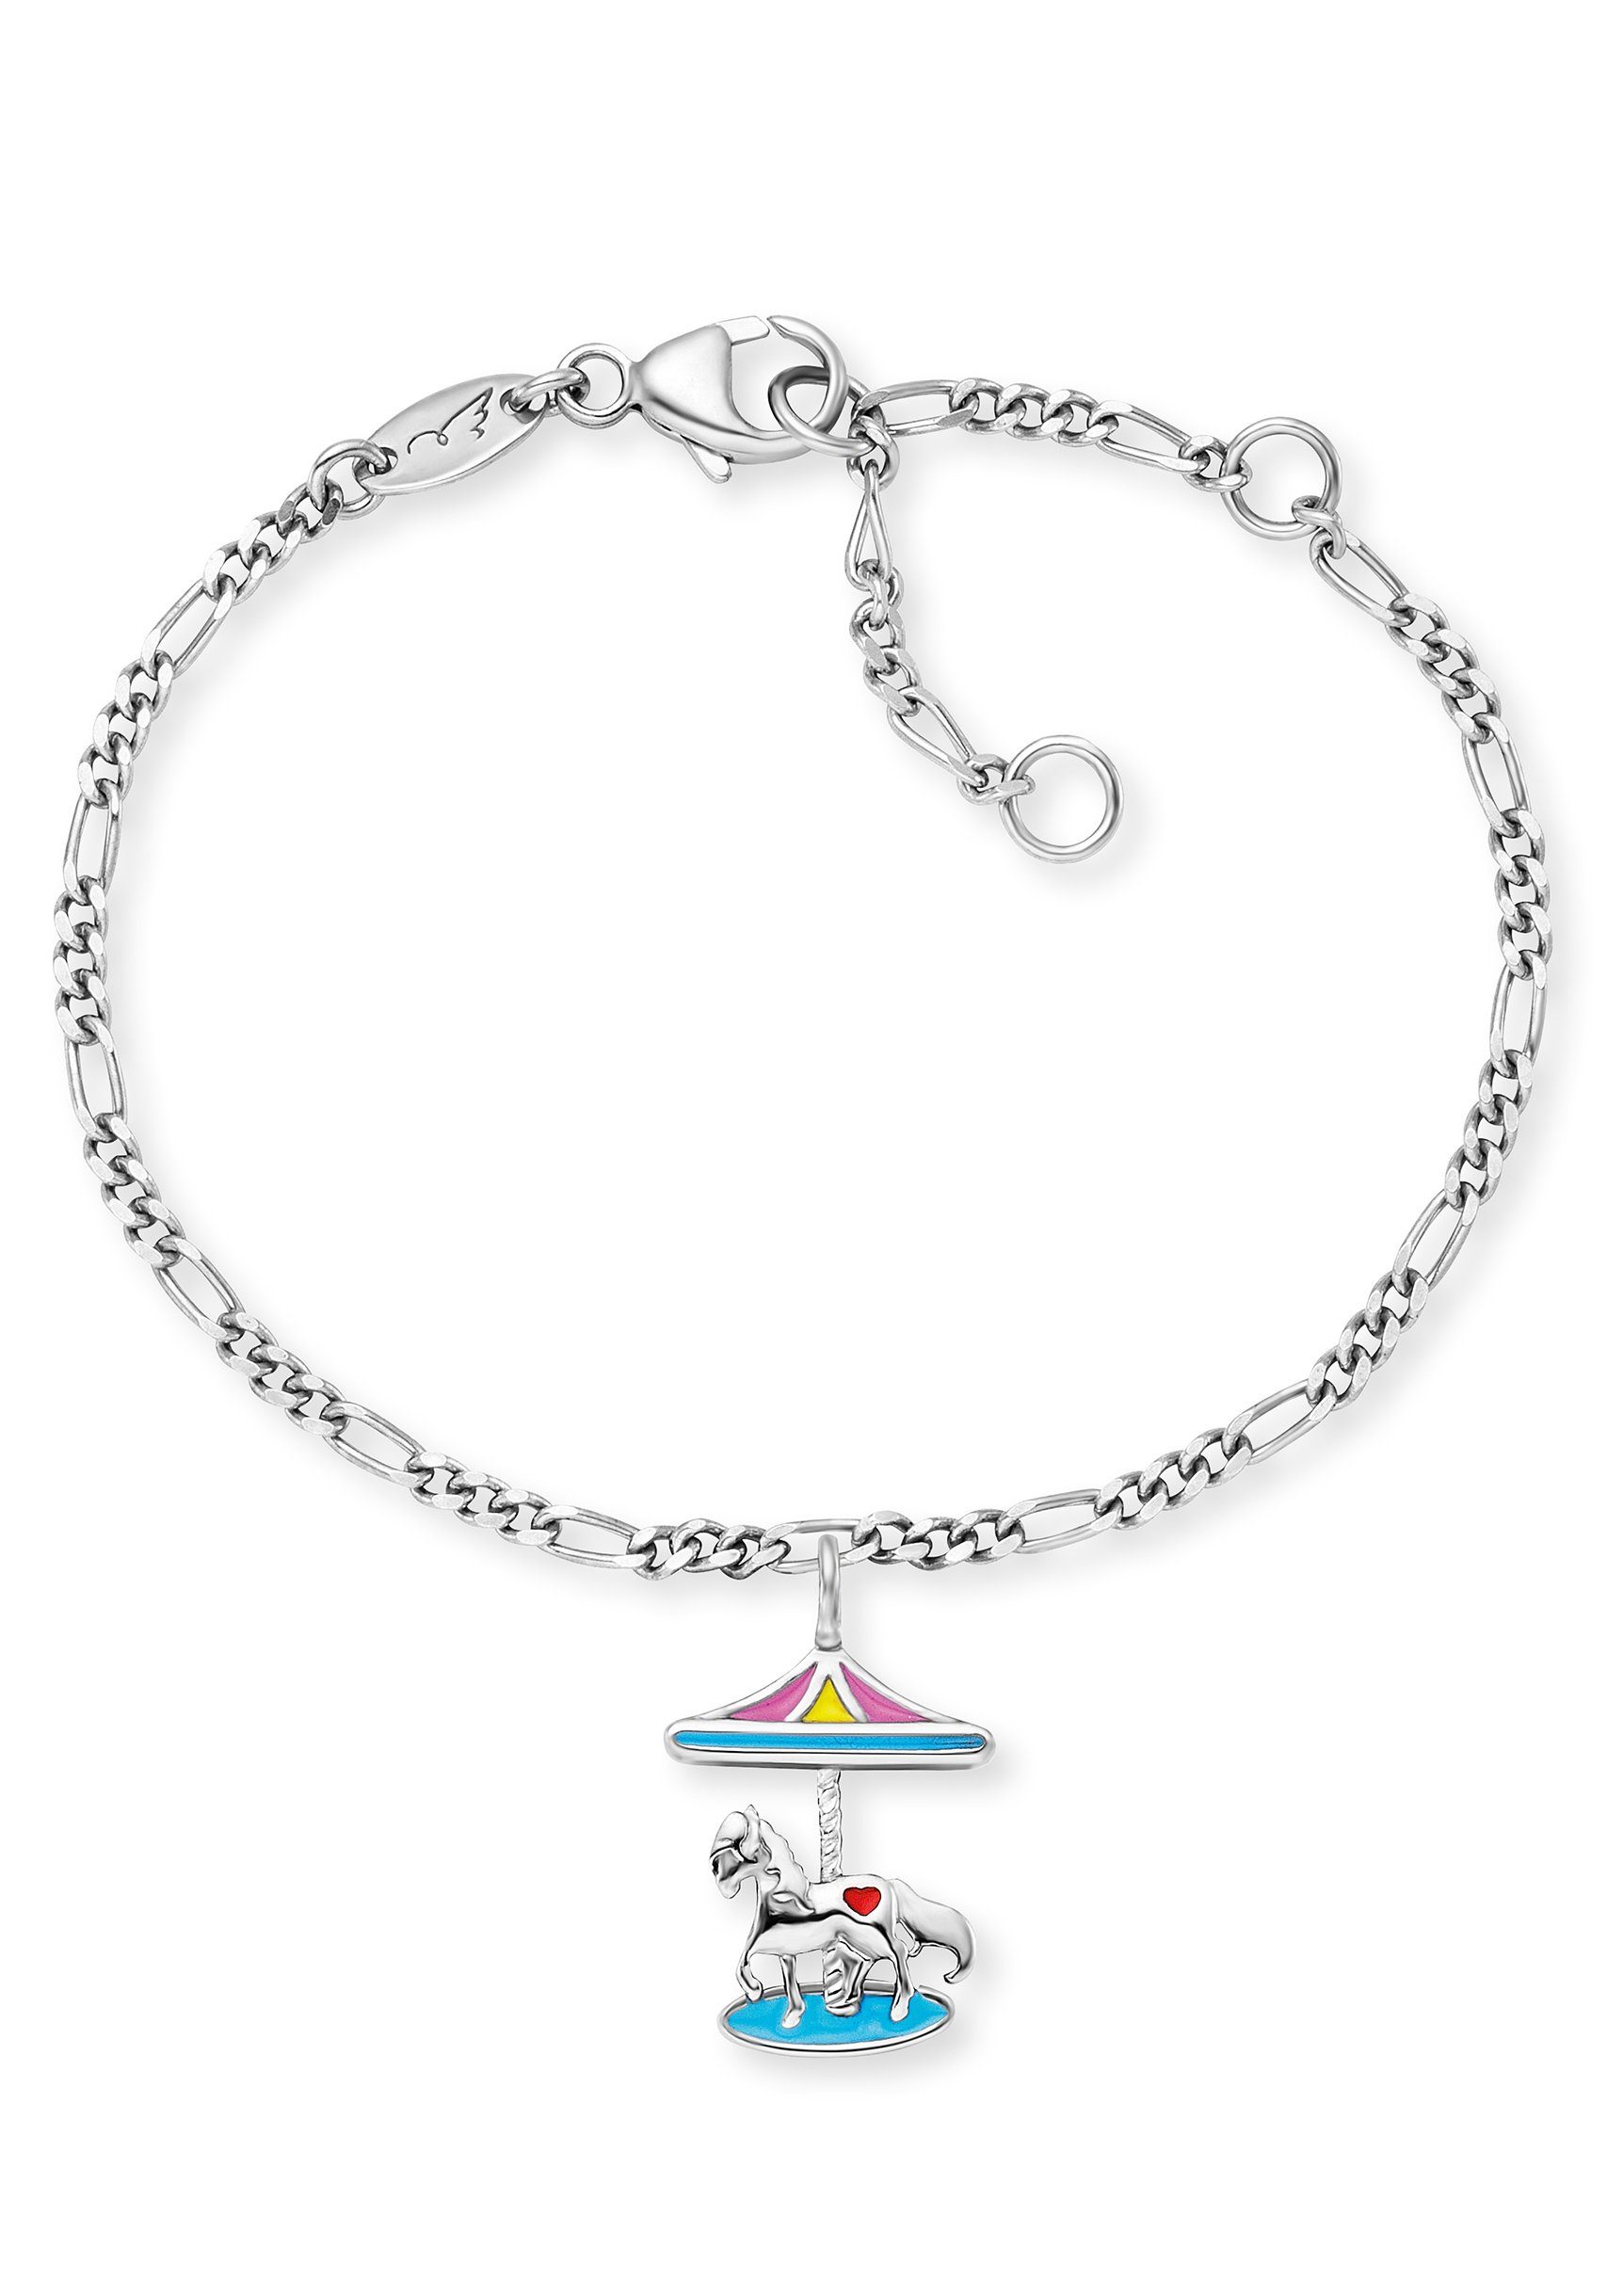 Herzengel Armband Karussell, HEB-CAROUSEL, mit Emaille | Silberarmbänder